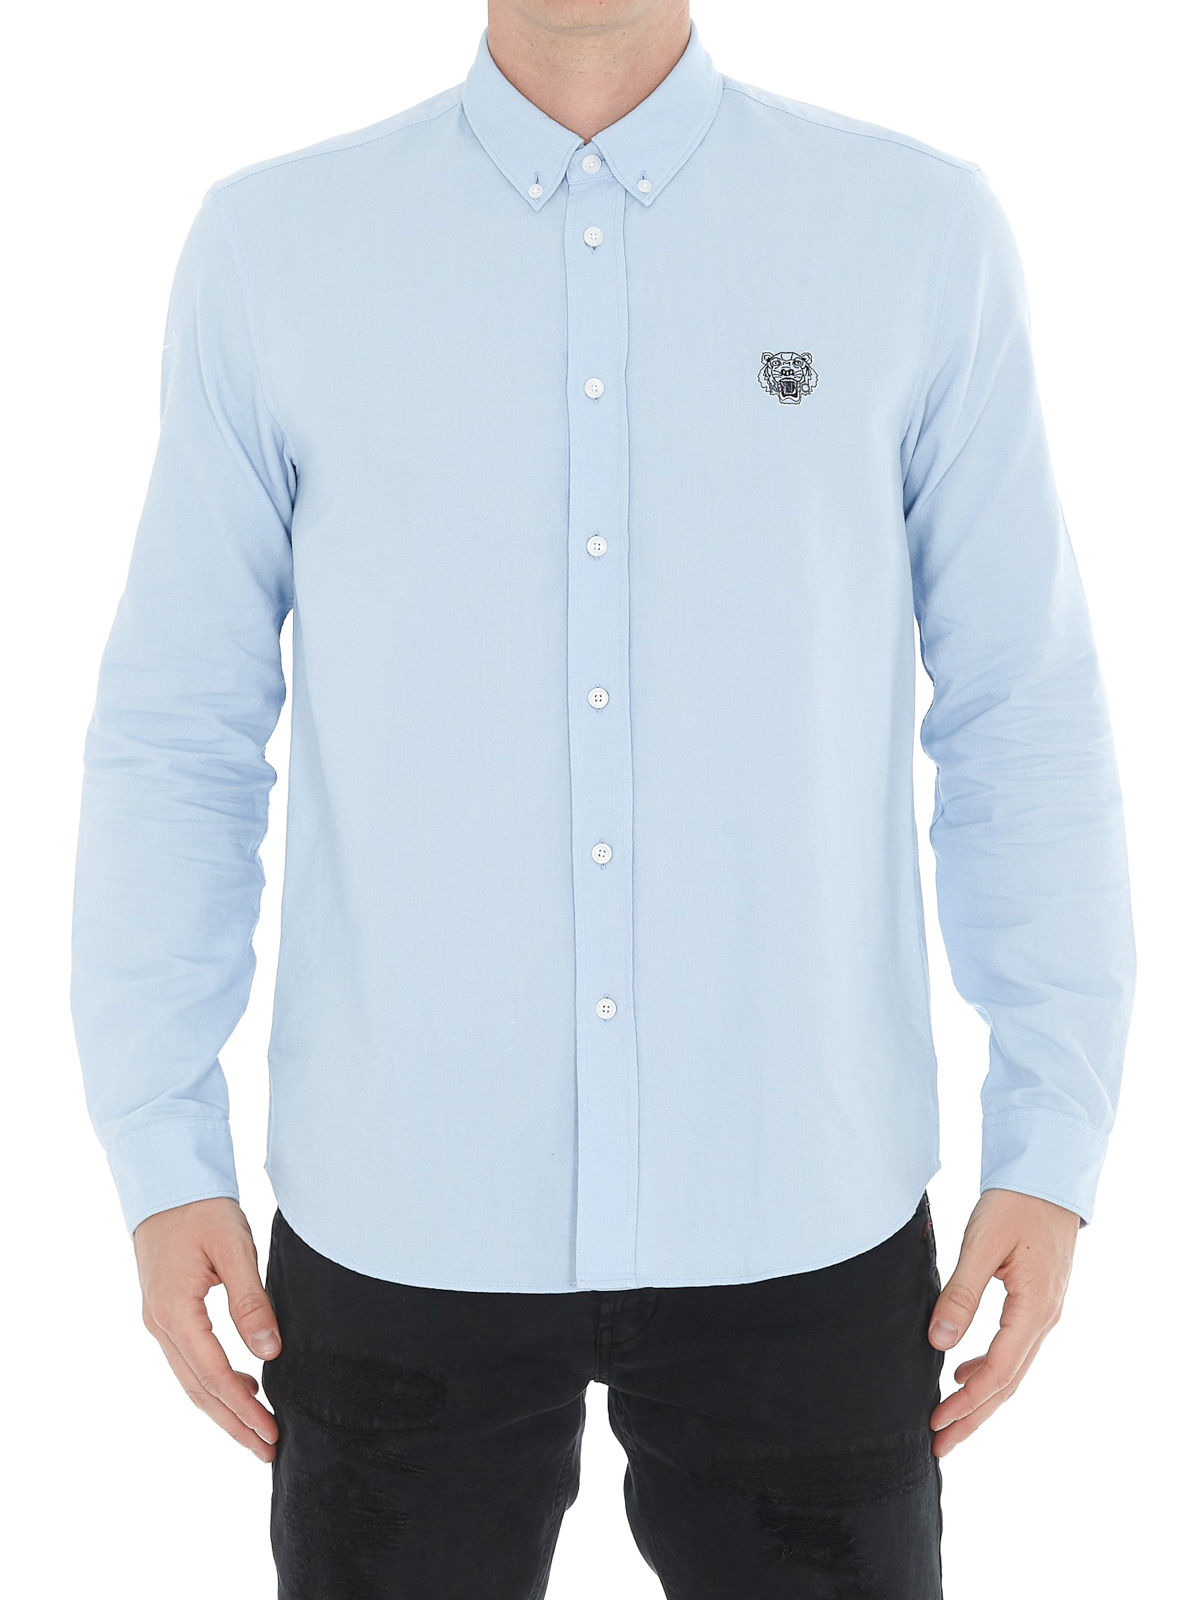 Shirts Kenzo - Tiger embroidery light blue shirt - 5CH4001LD63